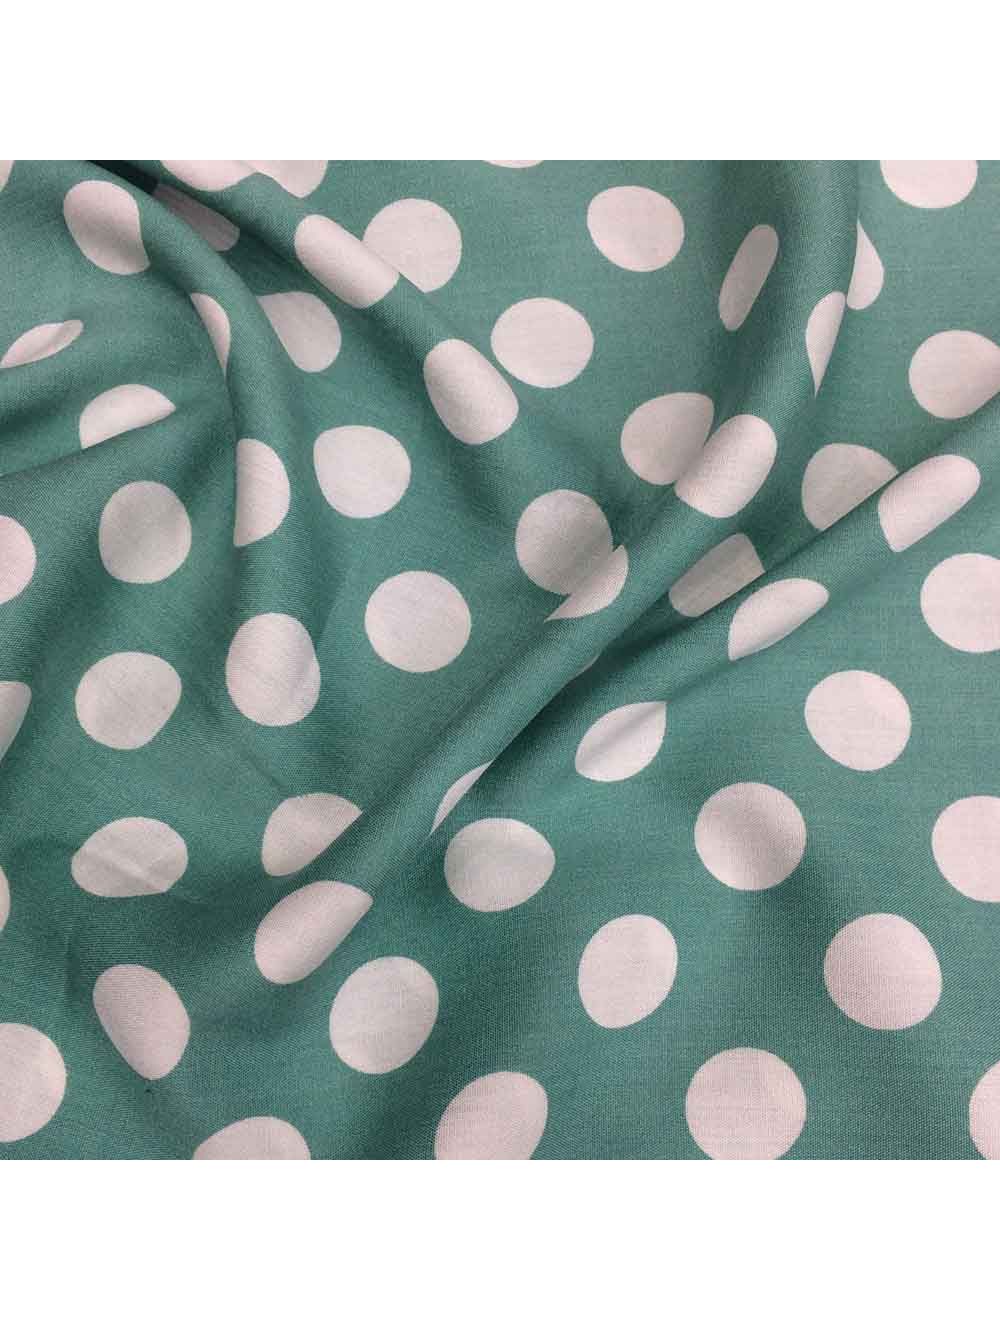 Pista Green Polka Dots Print Rayon Cotton Fabric